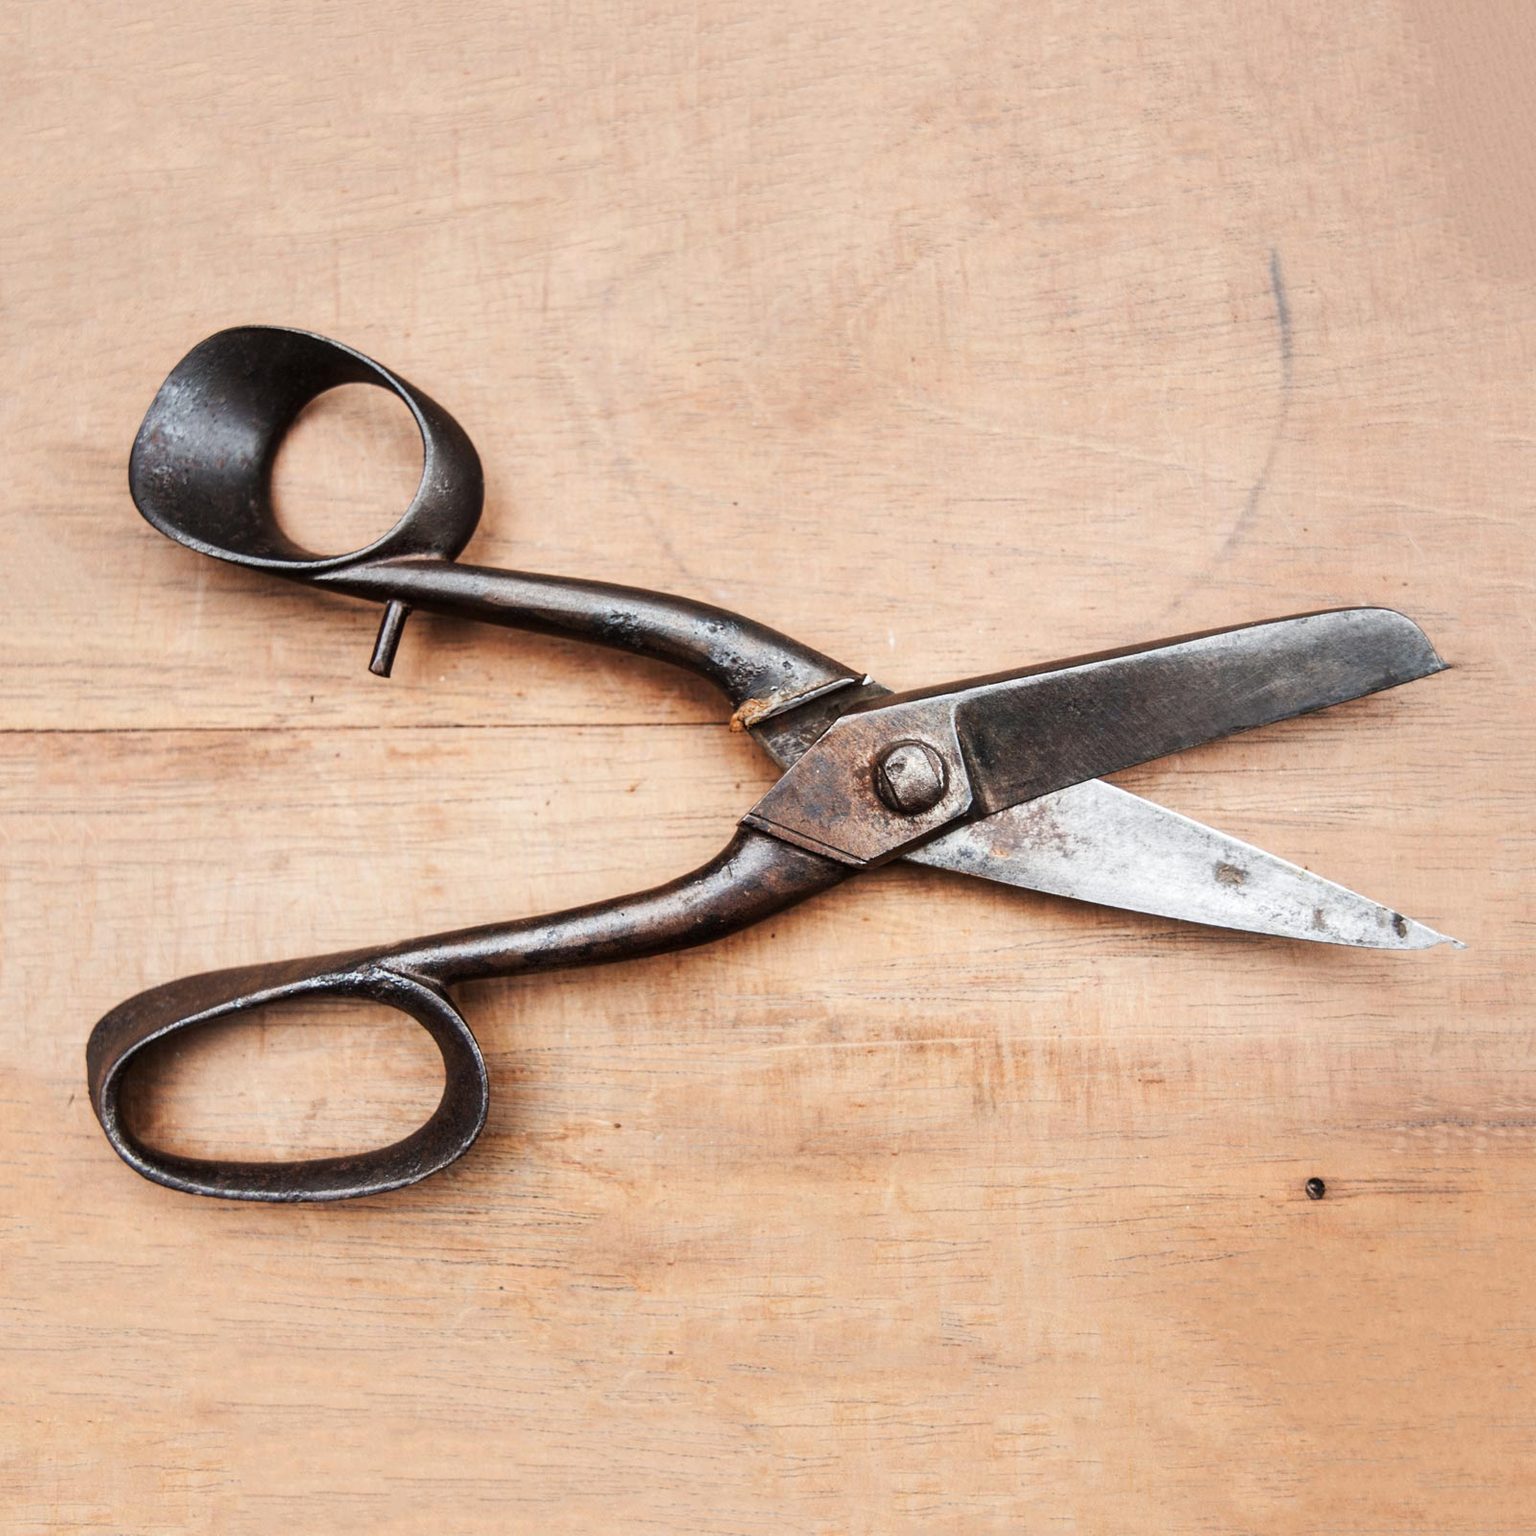 Revive old scissors